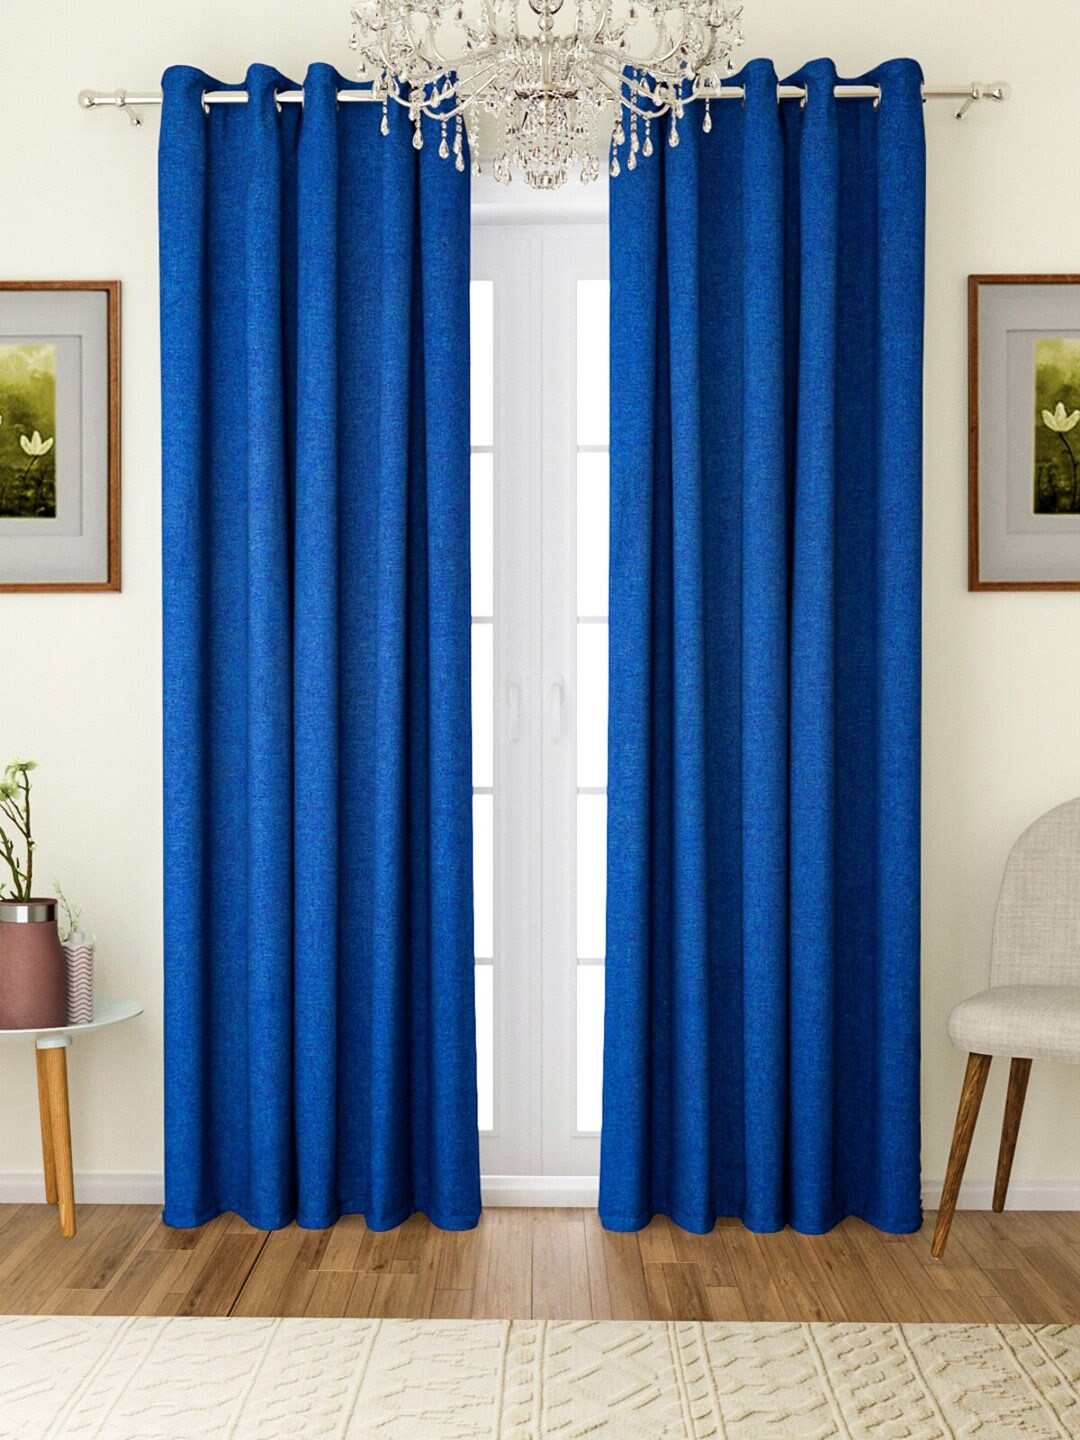 ROMEE Blue Set of 2 Solid Room Darkening Door Curtains Price in India